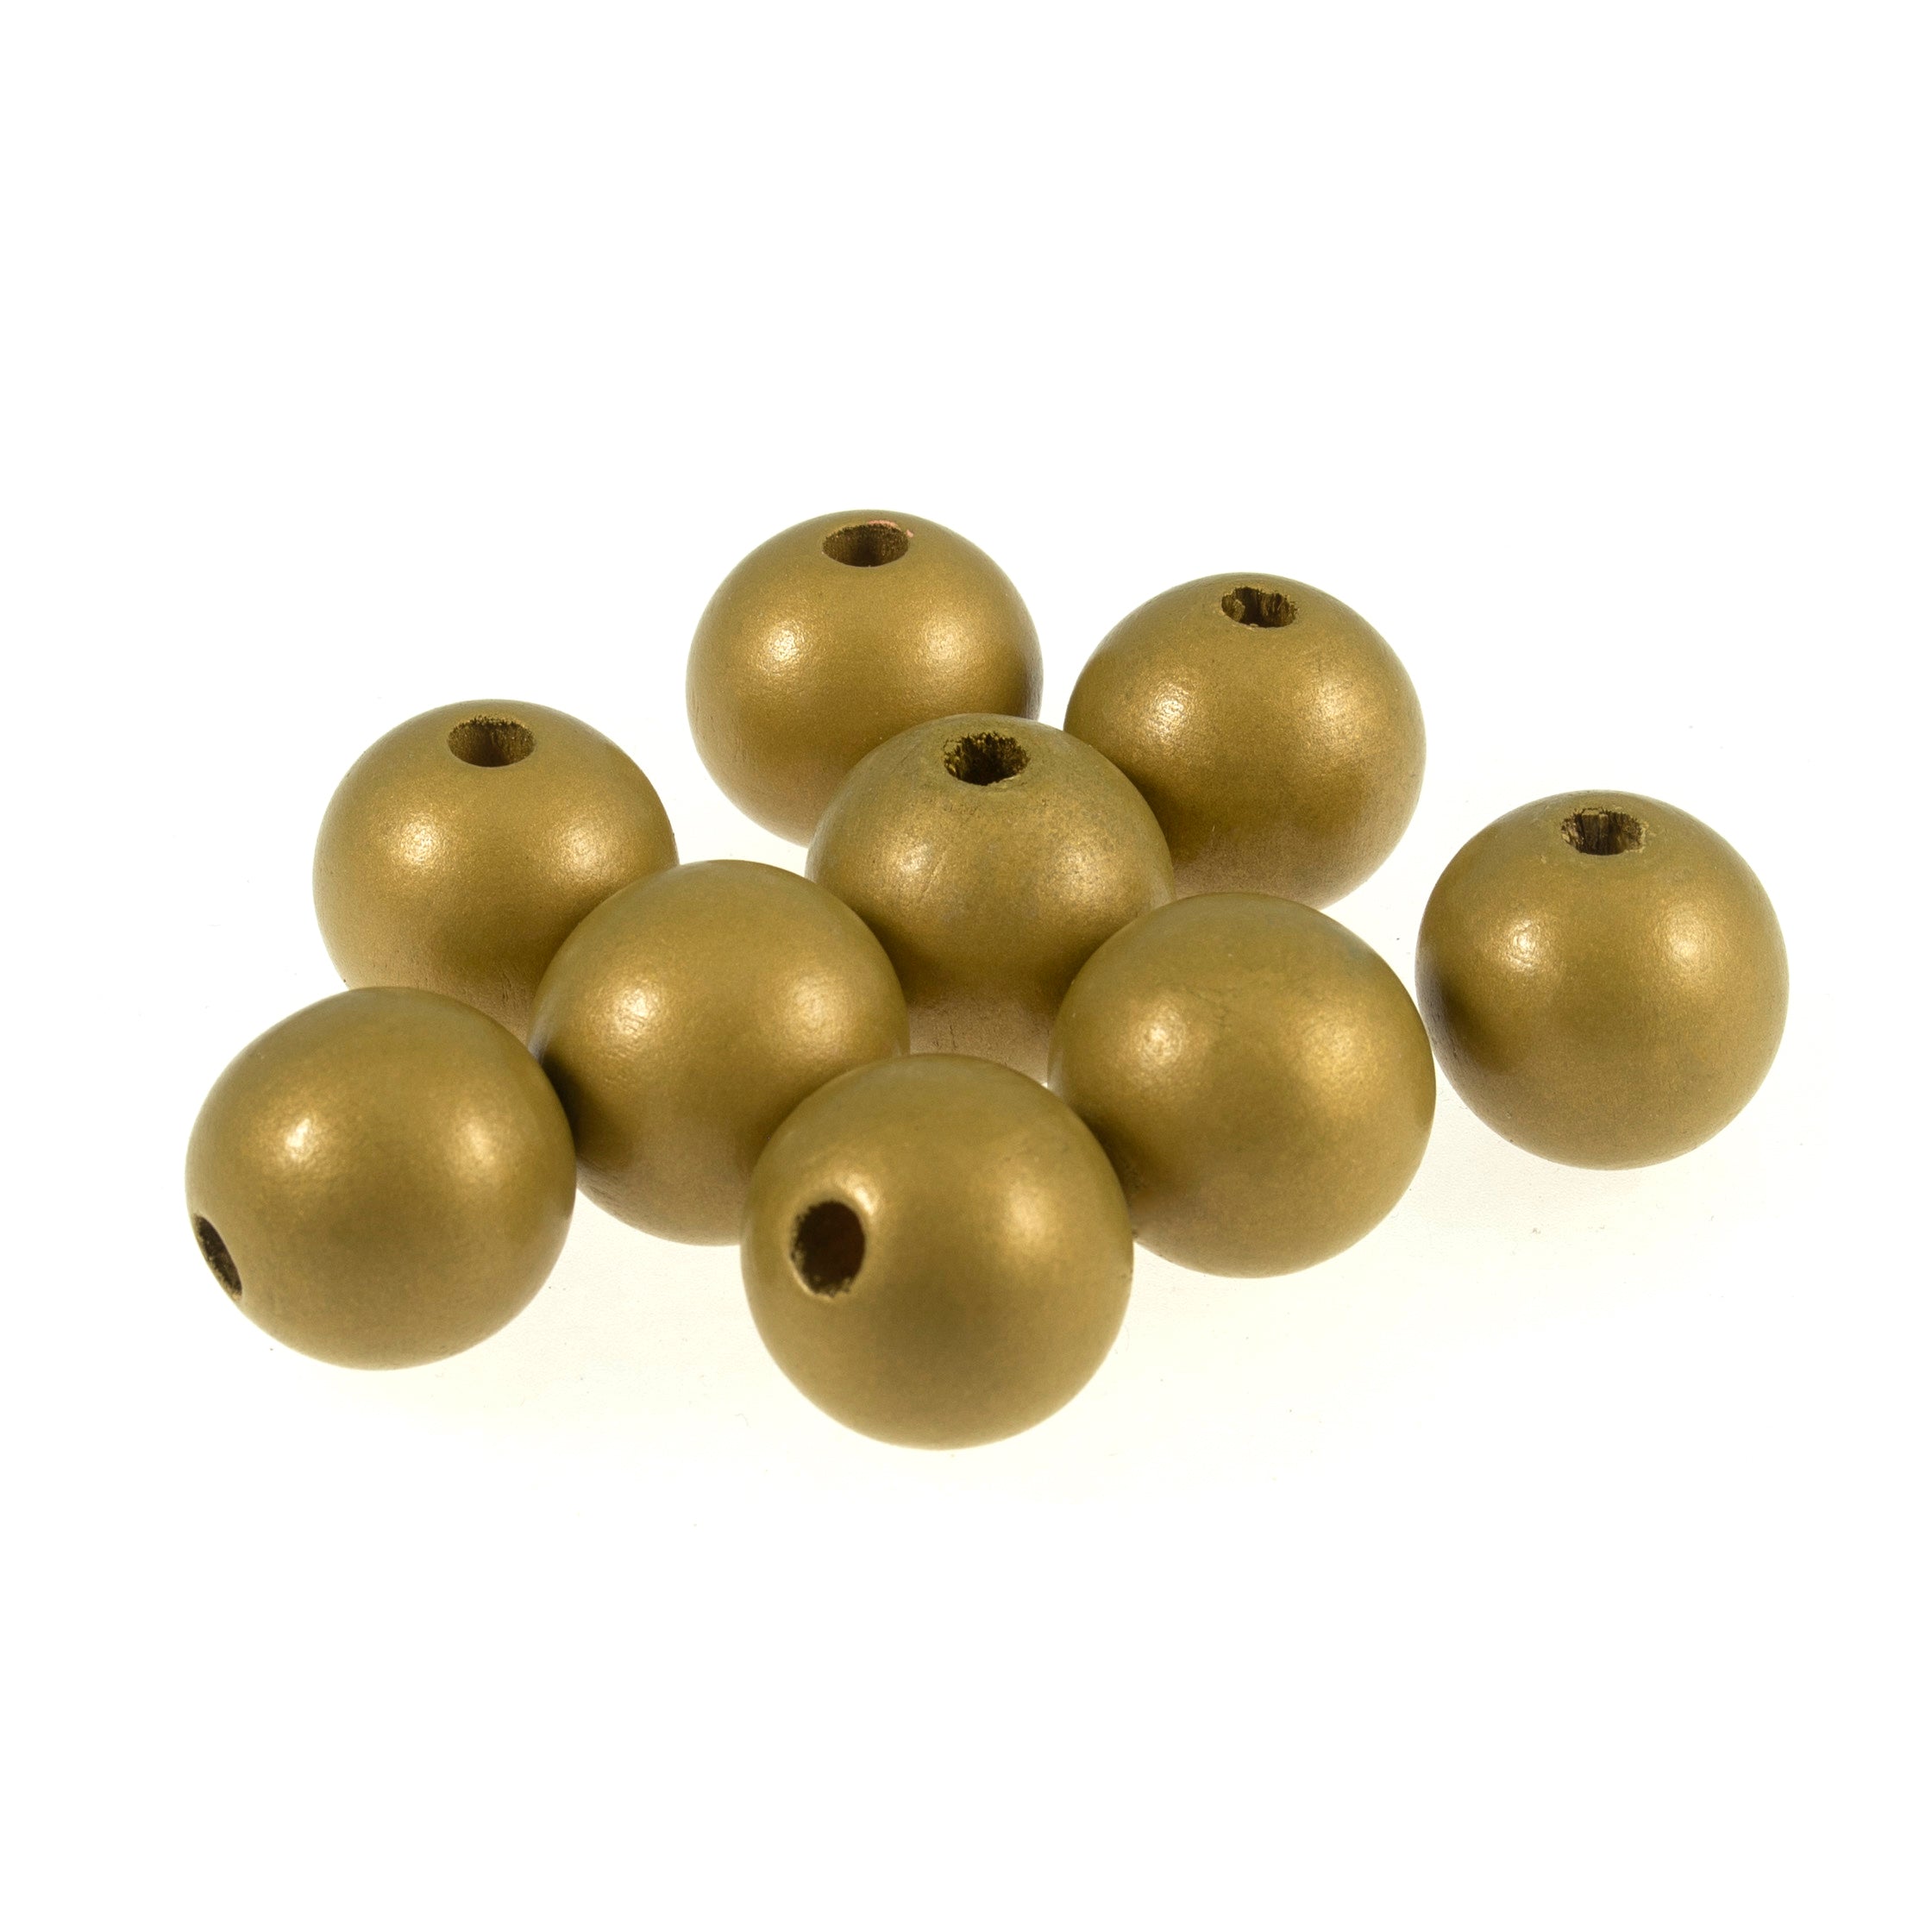 Wooden Craft Beads 25mm Gold